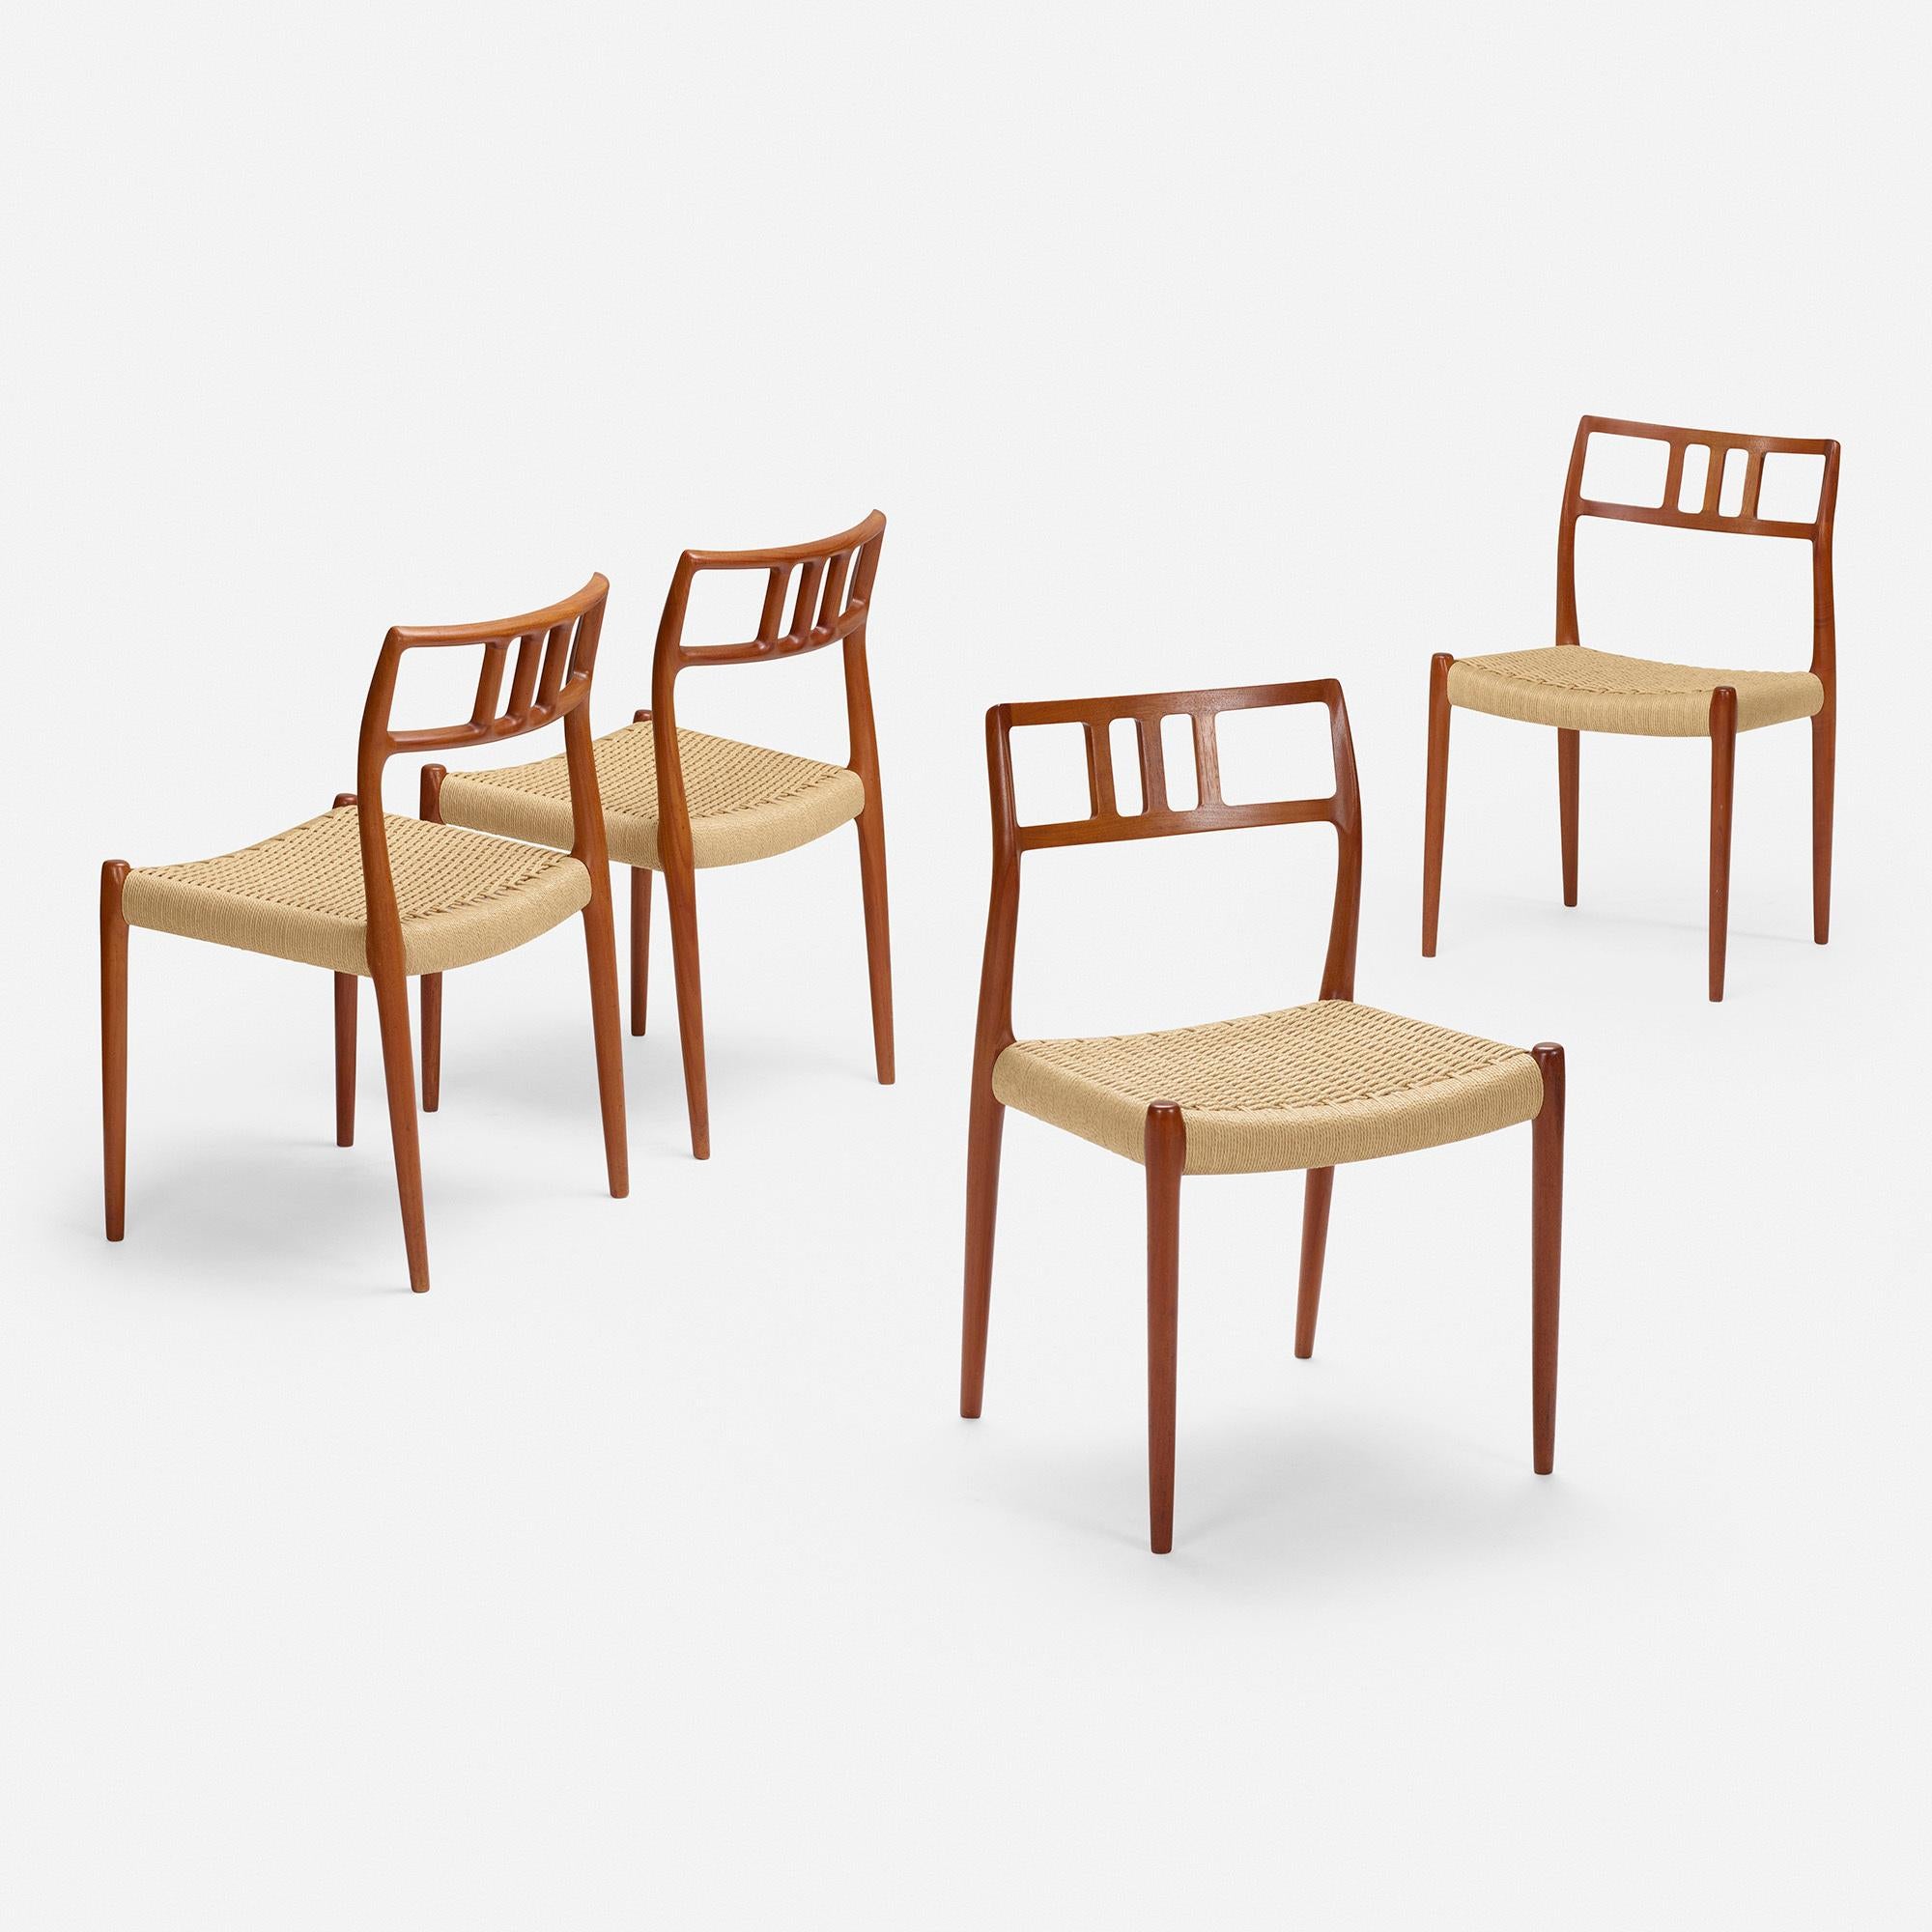 Set of four dining chairs, Model 79 by Niels O. Møller

Branded manufacturer's mark to underside of each example ‘J.L. Moller Models Made in Denmark Furnituremakers Danish Control’.

Additional information:
Made in Denmark
Material: Teak,